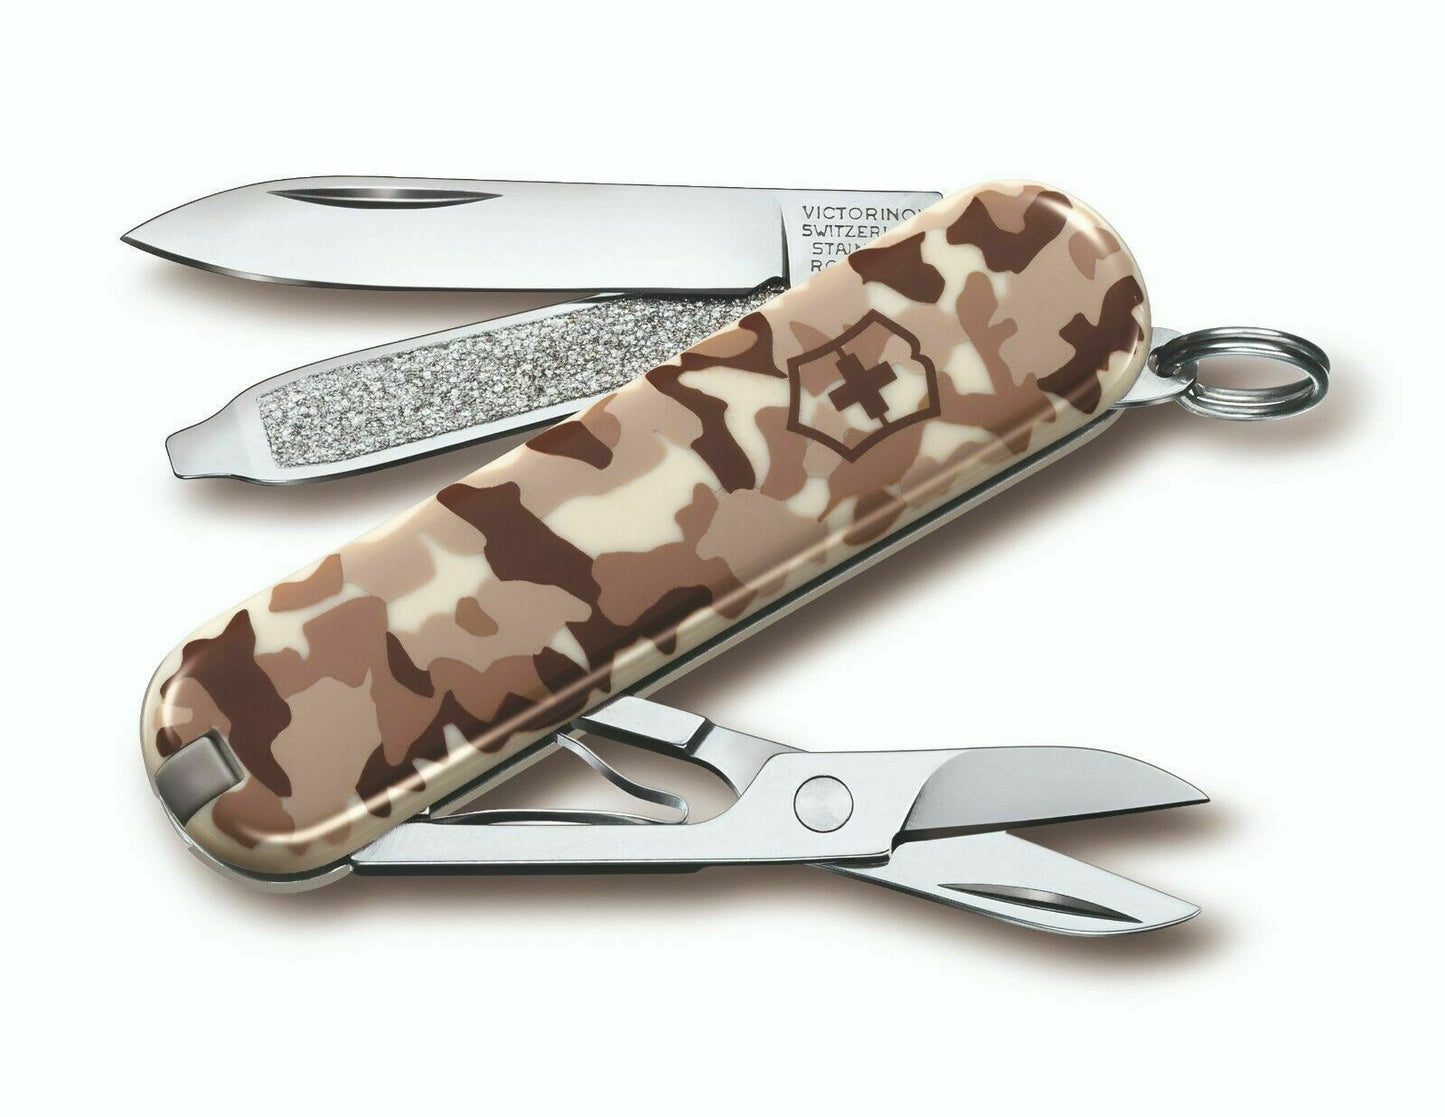 GENUINE VICTORINOX SWISS ARMY 35914 CLASSIC DESERT CAMOUFLAGE KNIFE MULTI TOOL